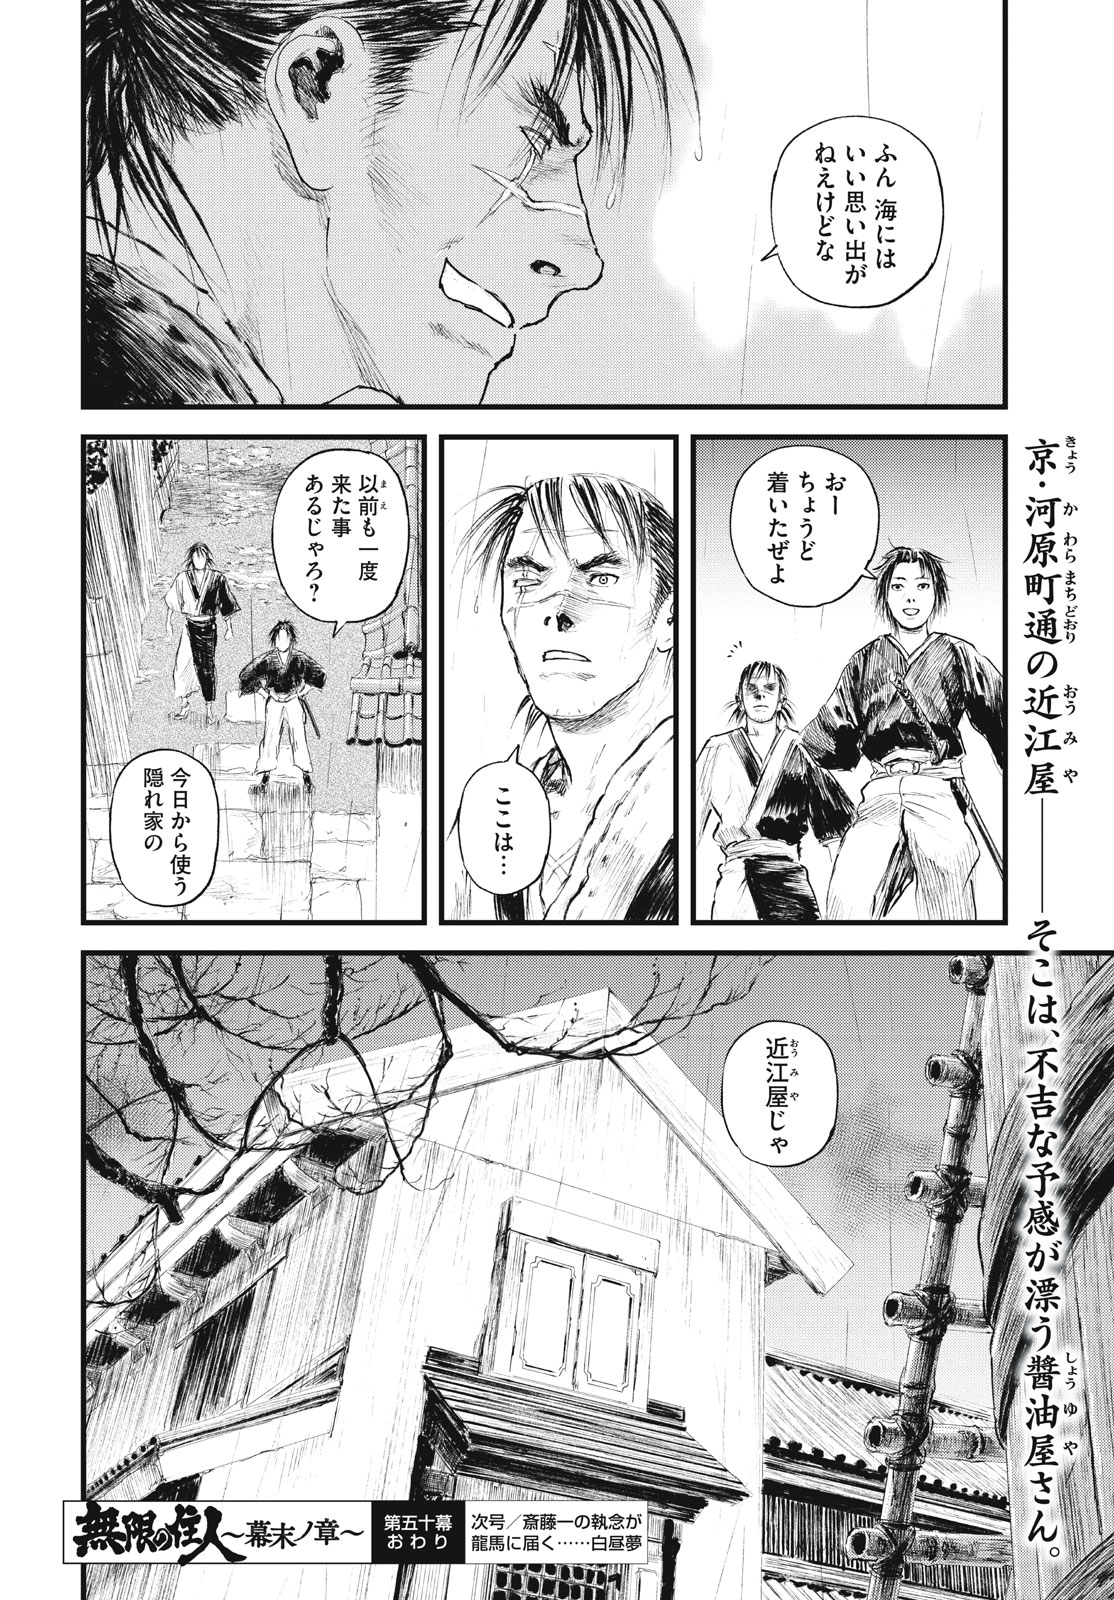 Blade of the Immortal: Bakumatsu Arc - Chapter 50 - Page 30